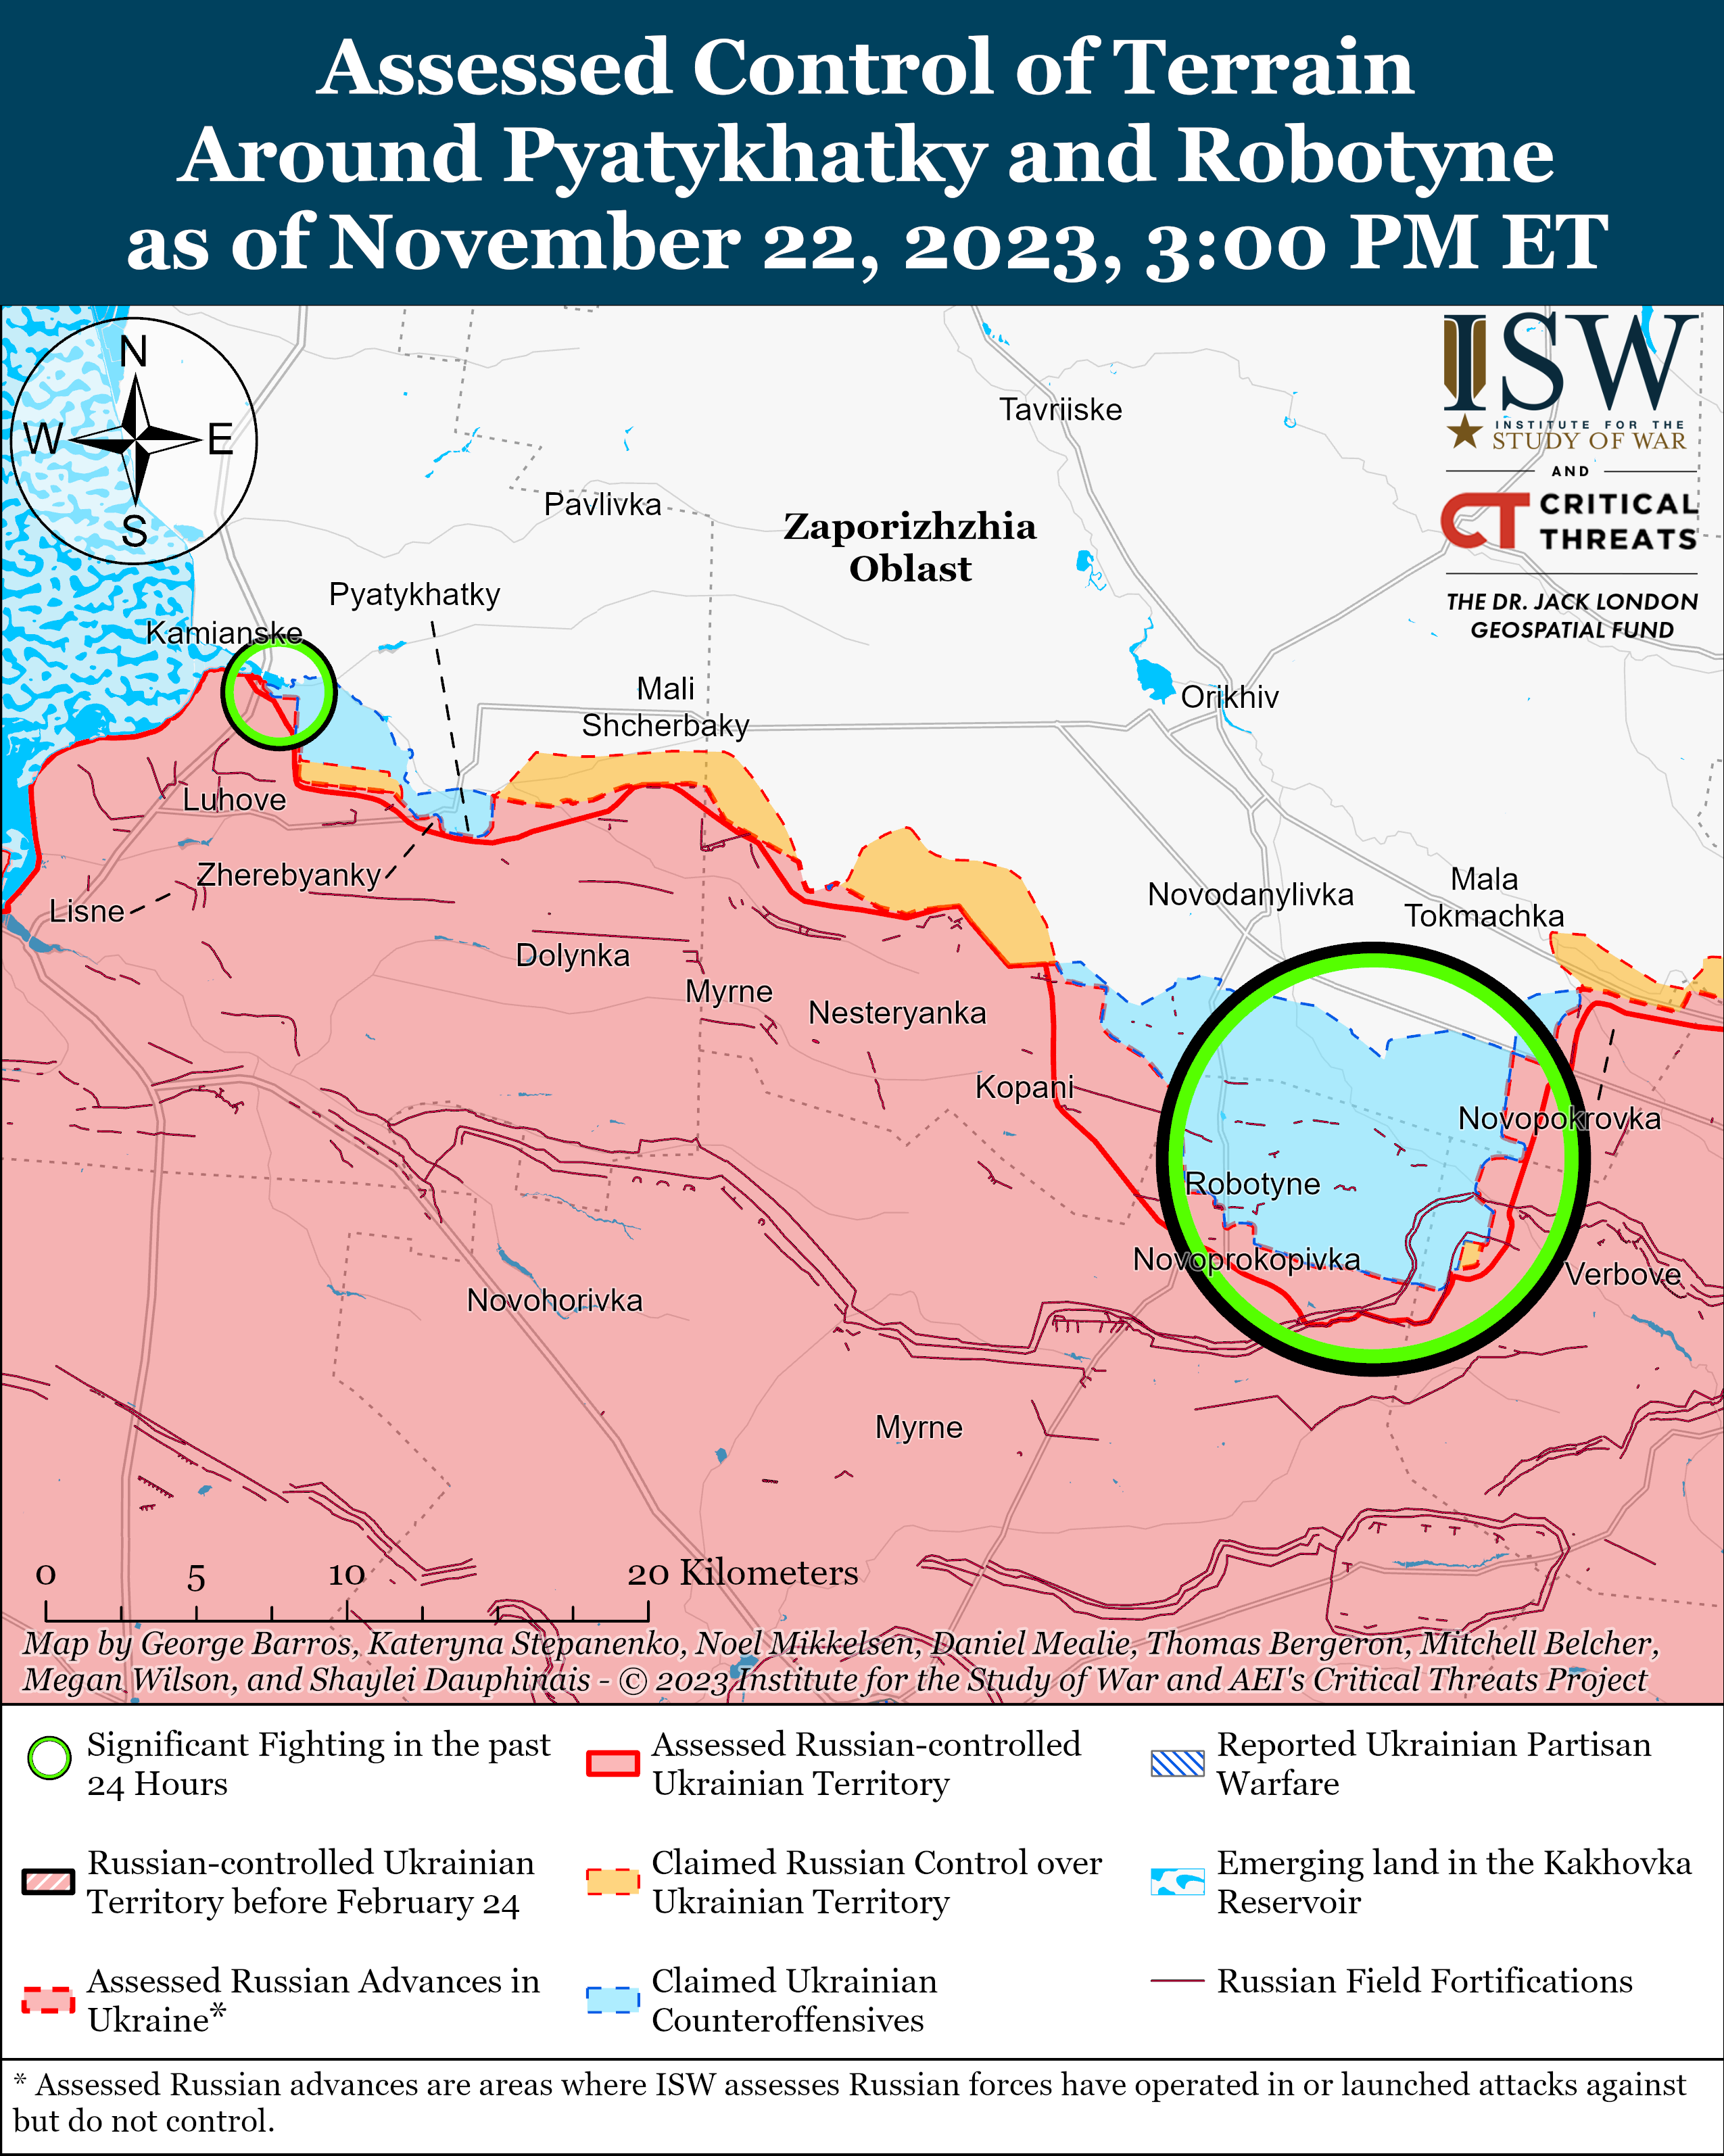 Pryatykhatky_and_Robotyne_Battle_Map_Draft_November_22_2023.png